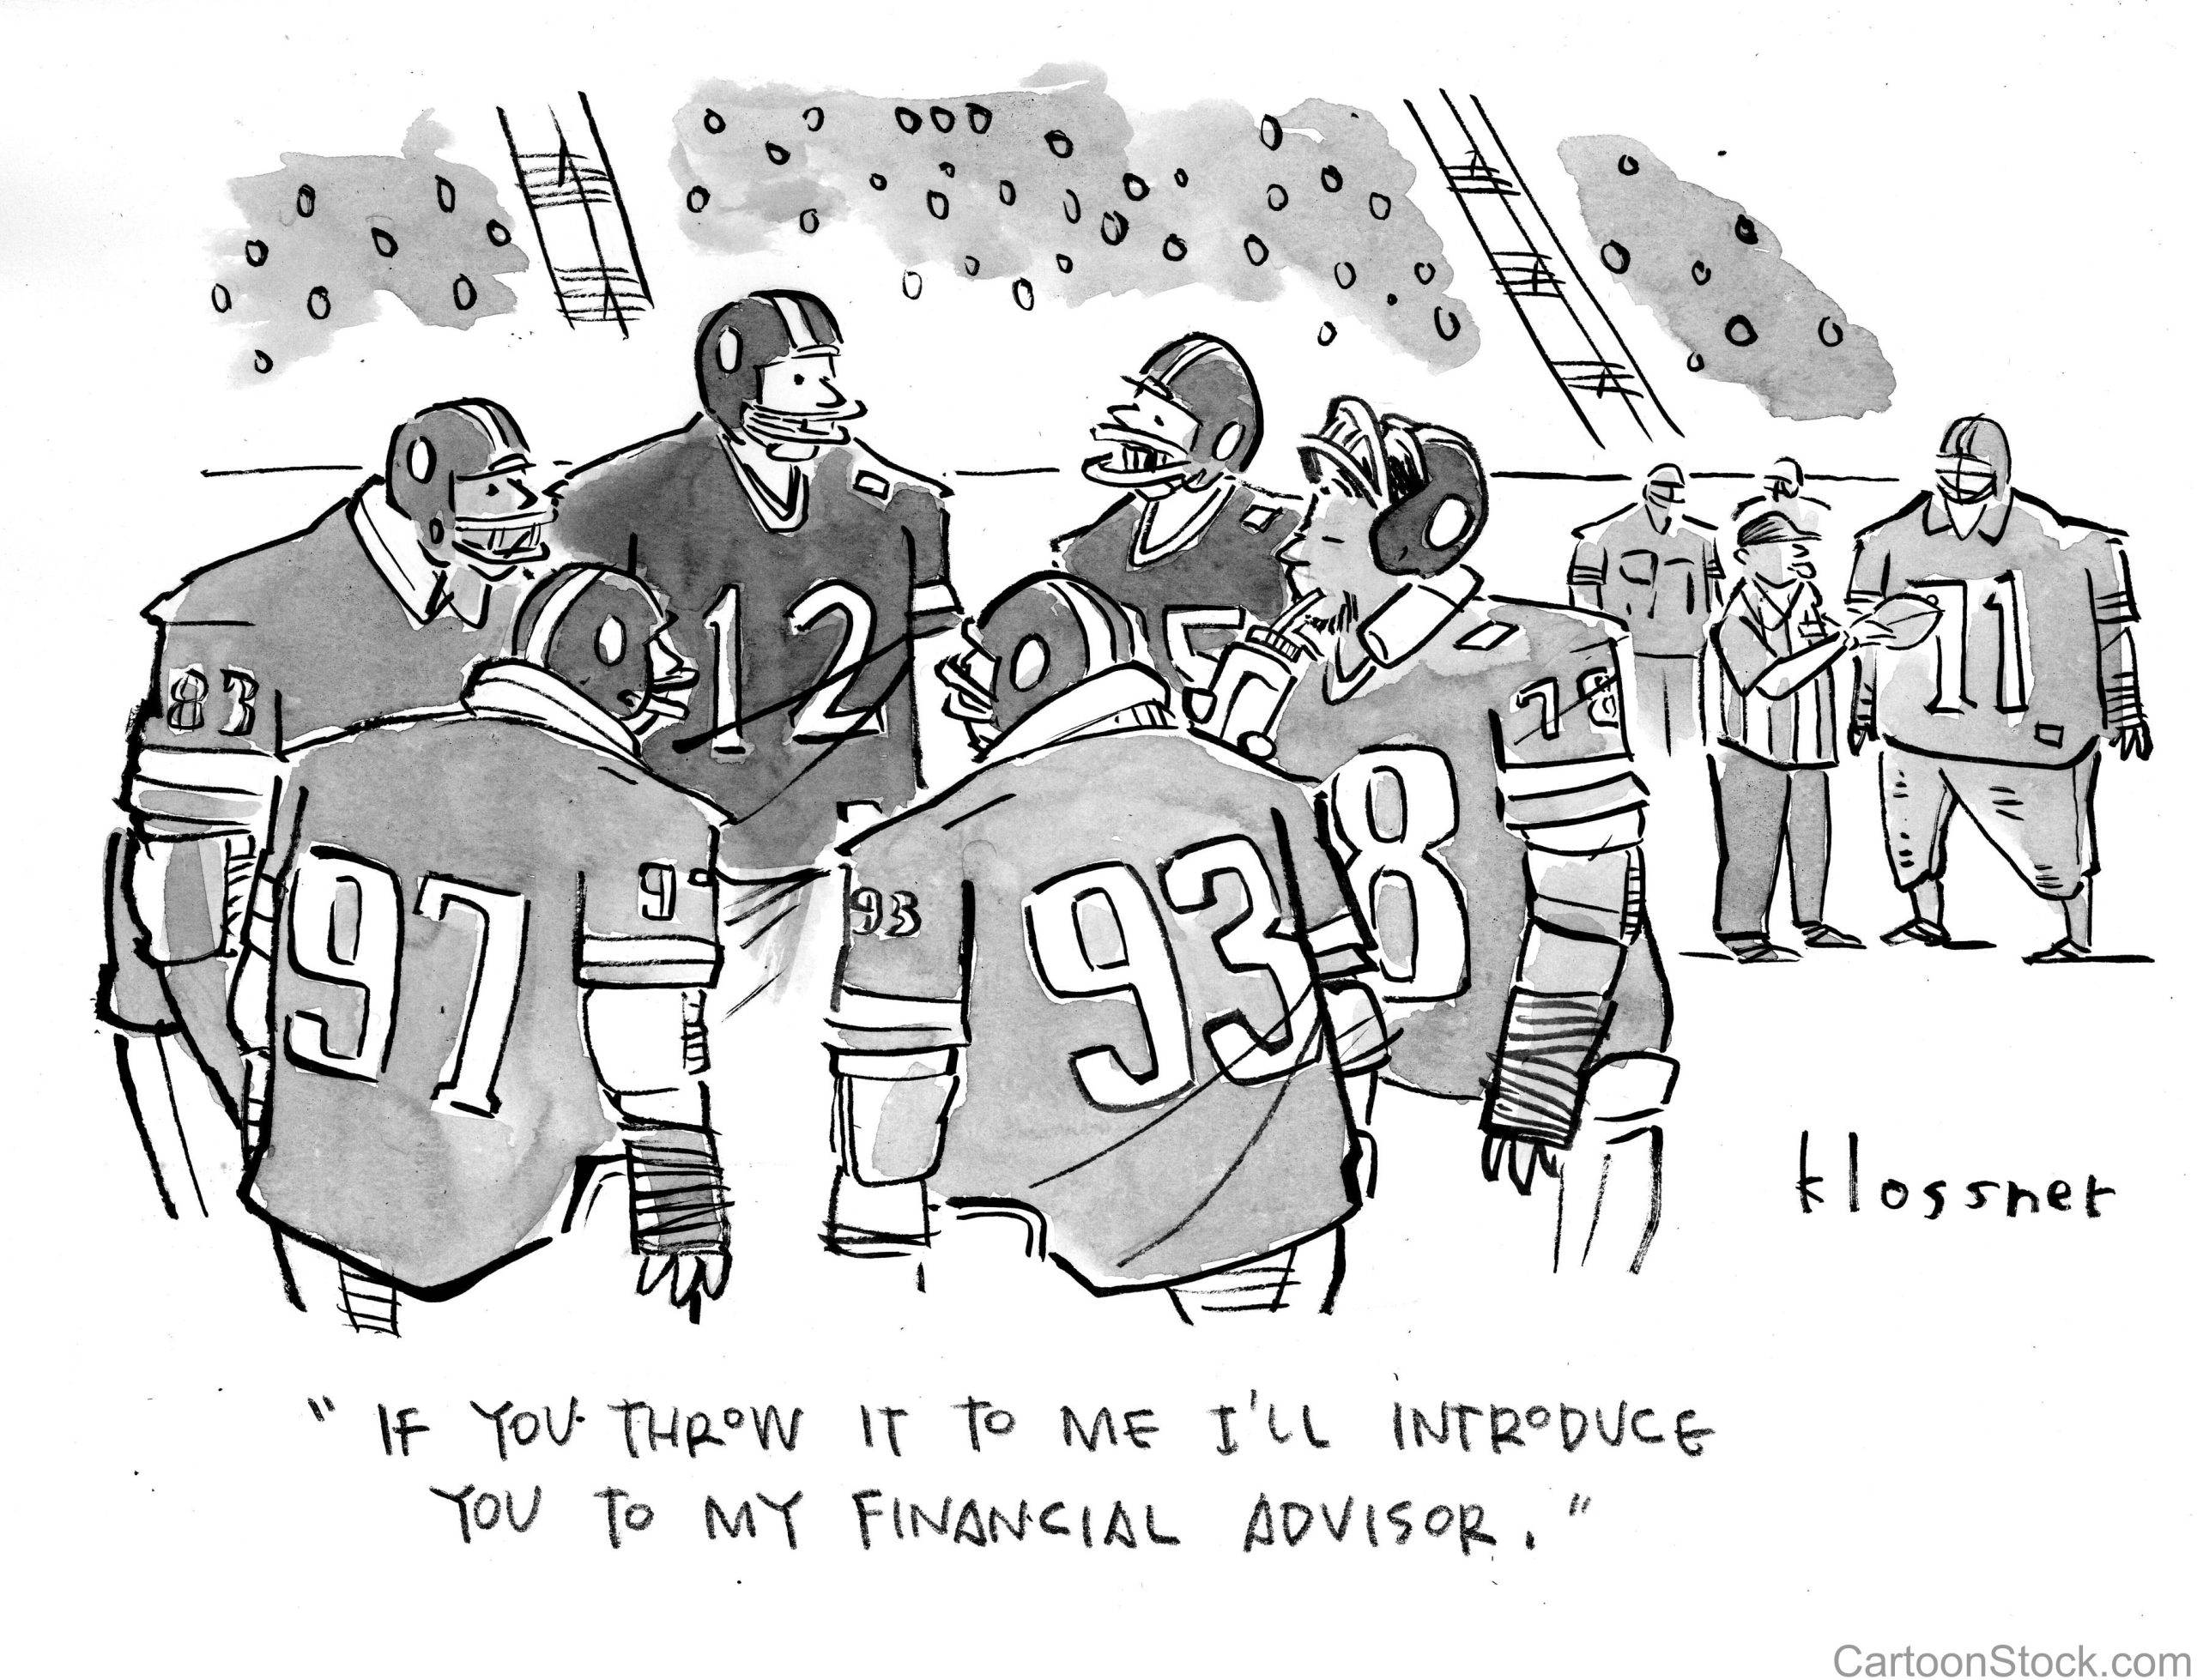 financial advisor-football